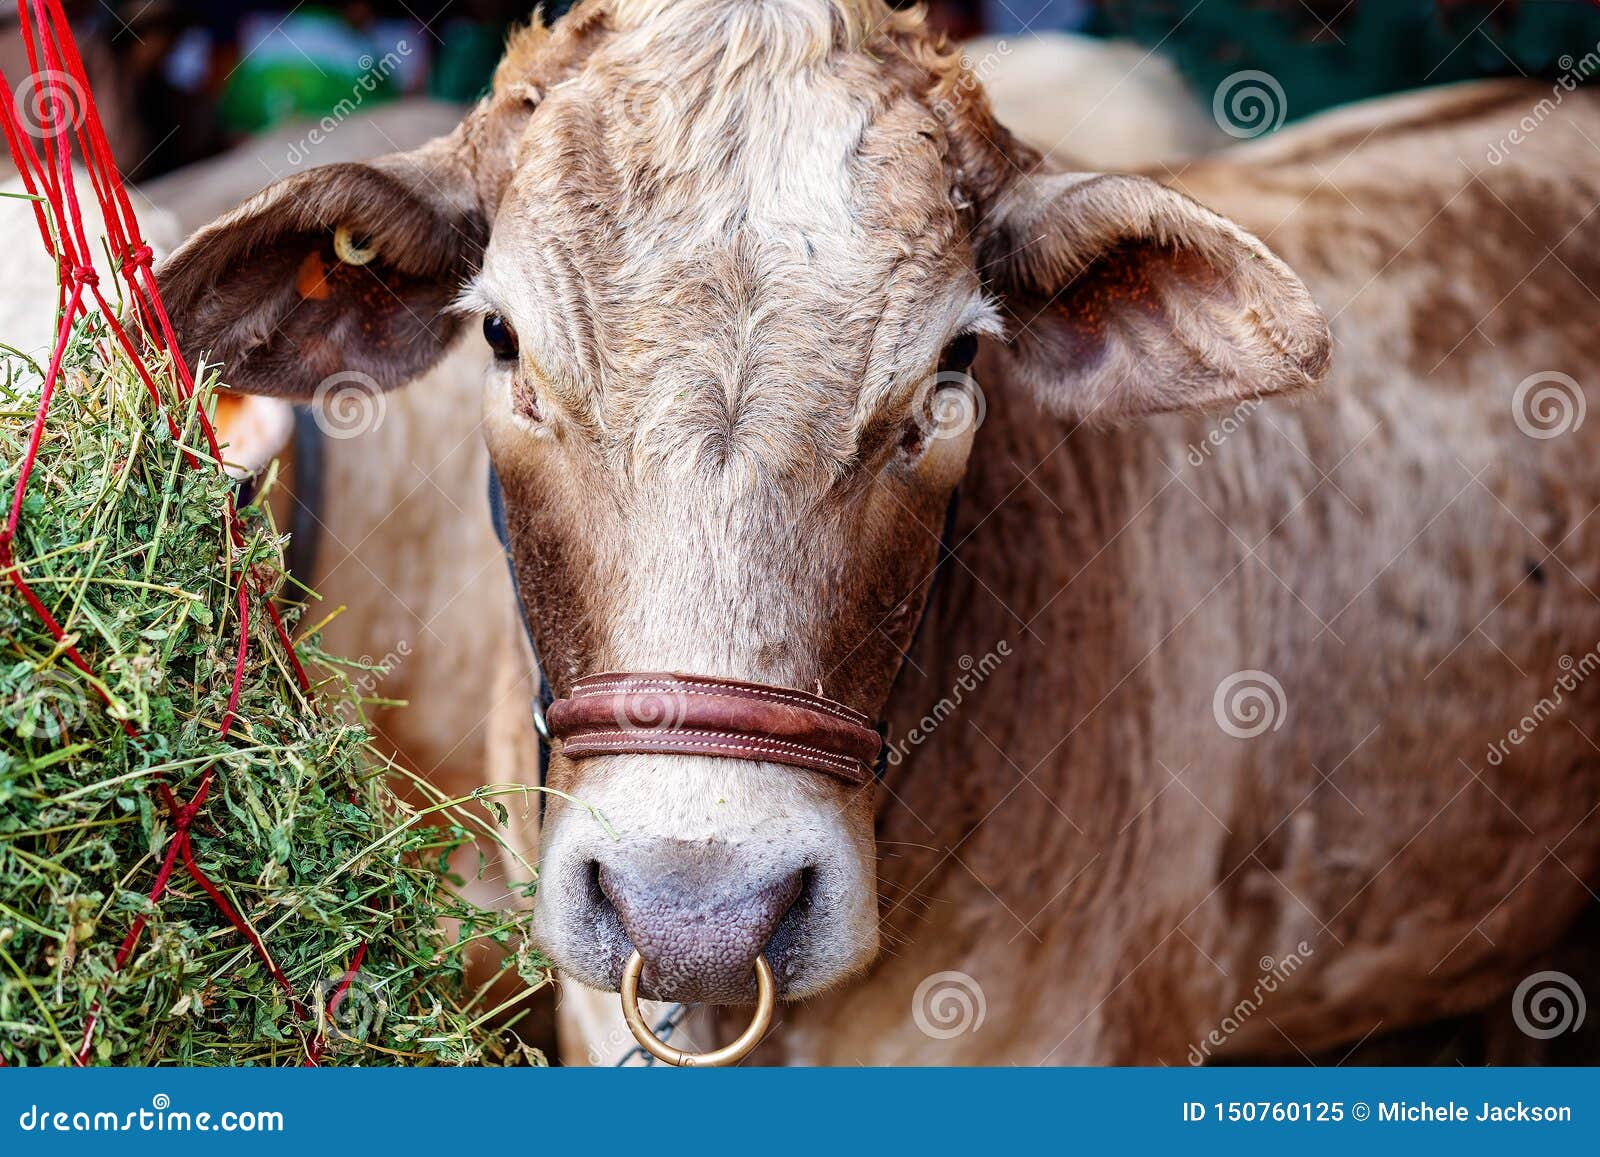 Impressive Oax Huge Horns Nose Ring Stock Photo 1020794305 | Shutterstock